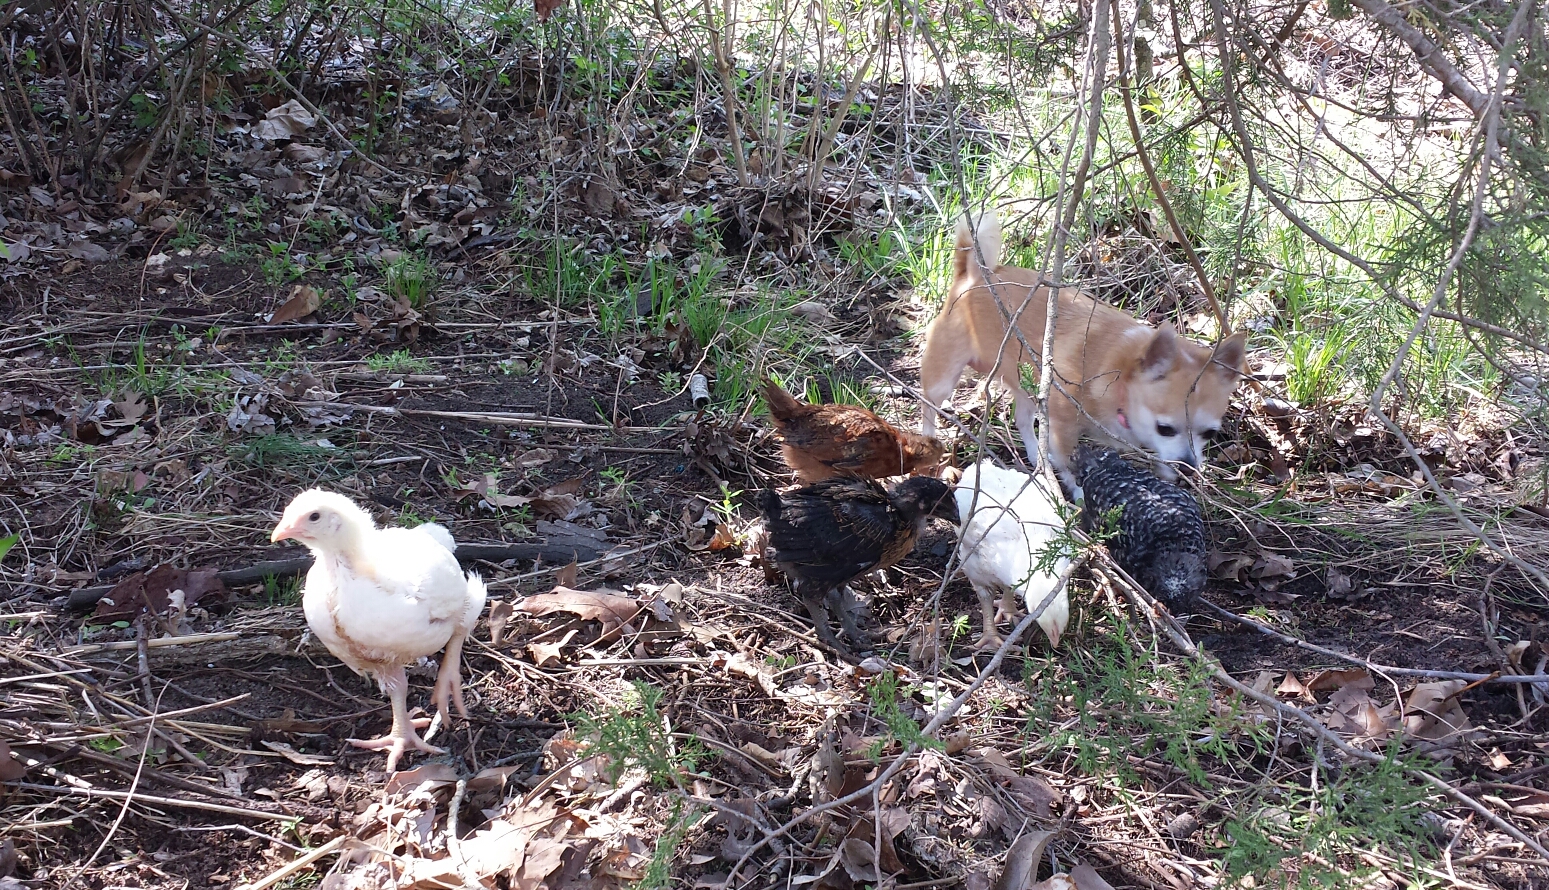 Chicks free ranging with Mia.